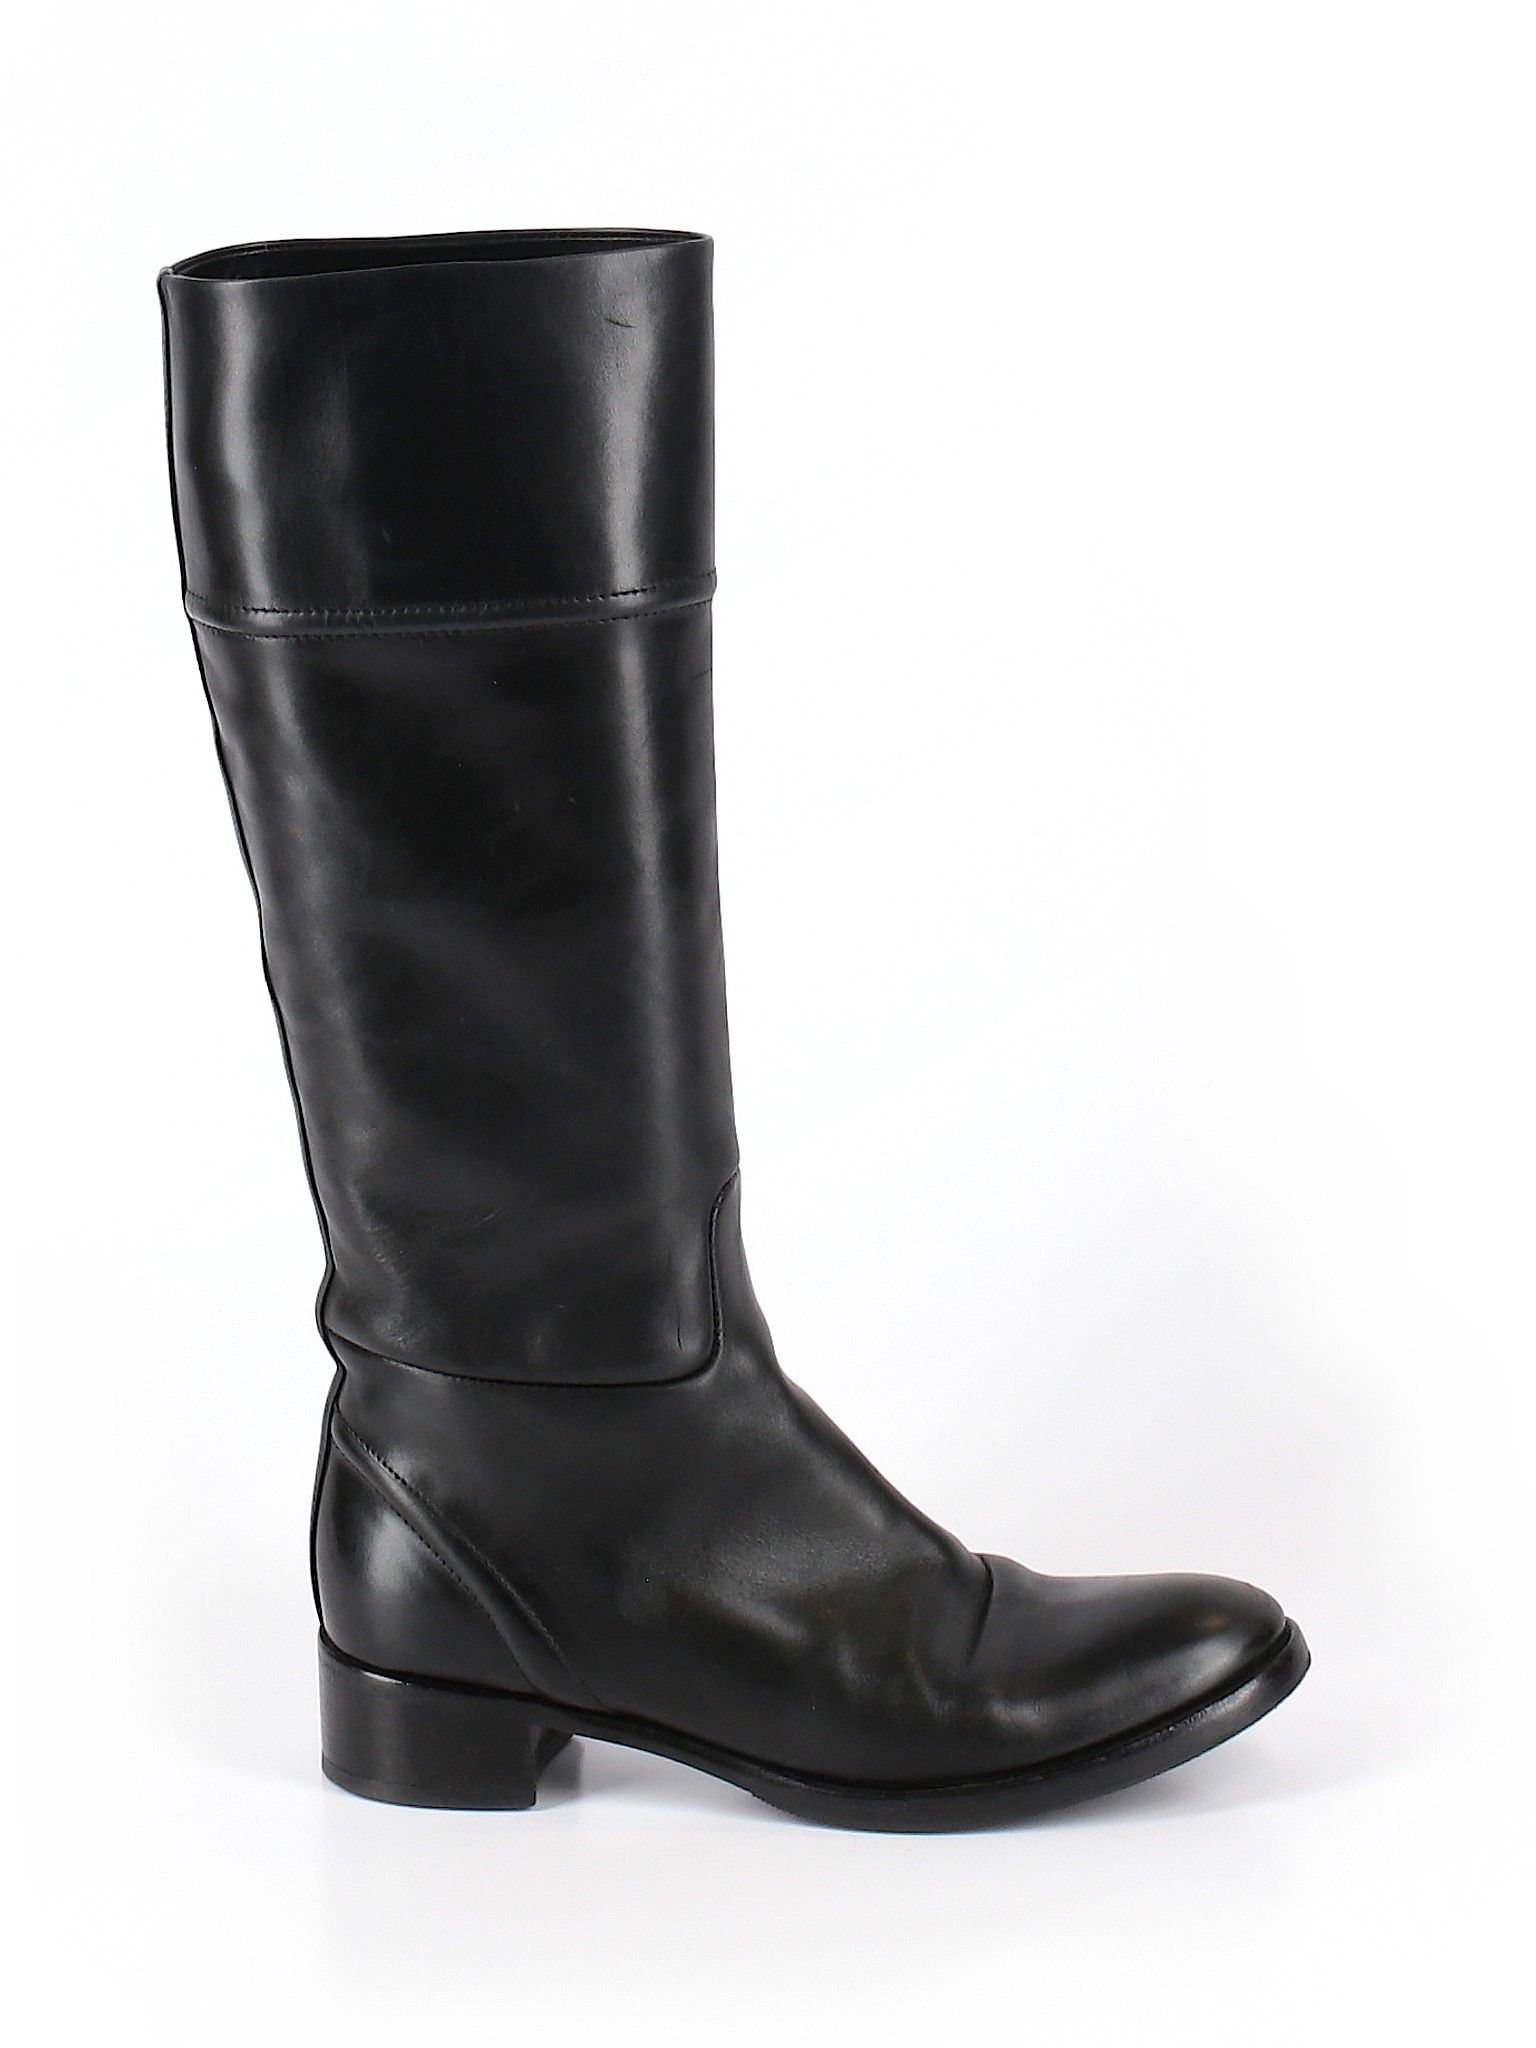 Assorted Brands Women Black Boots EUR 36 | eBay